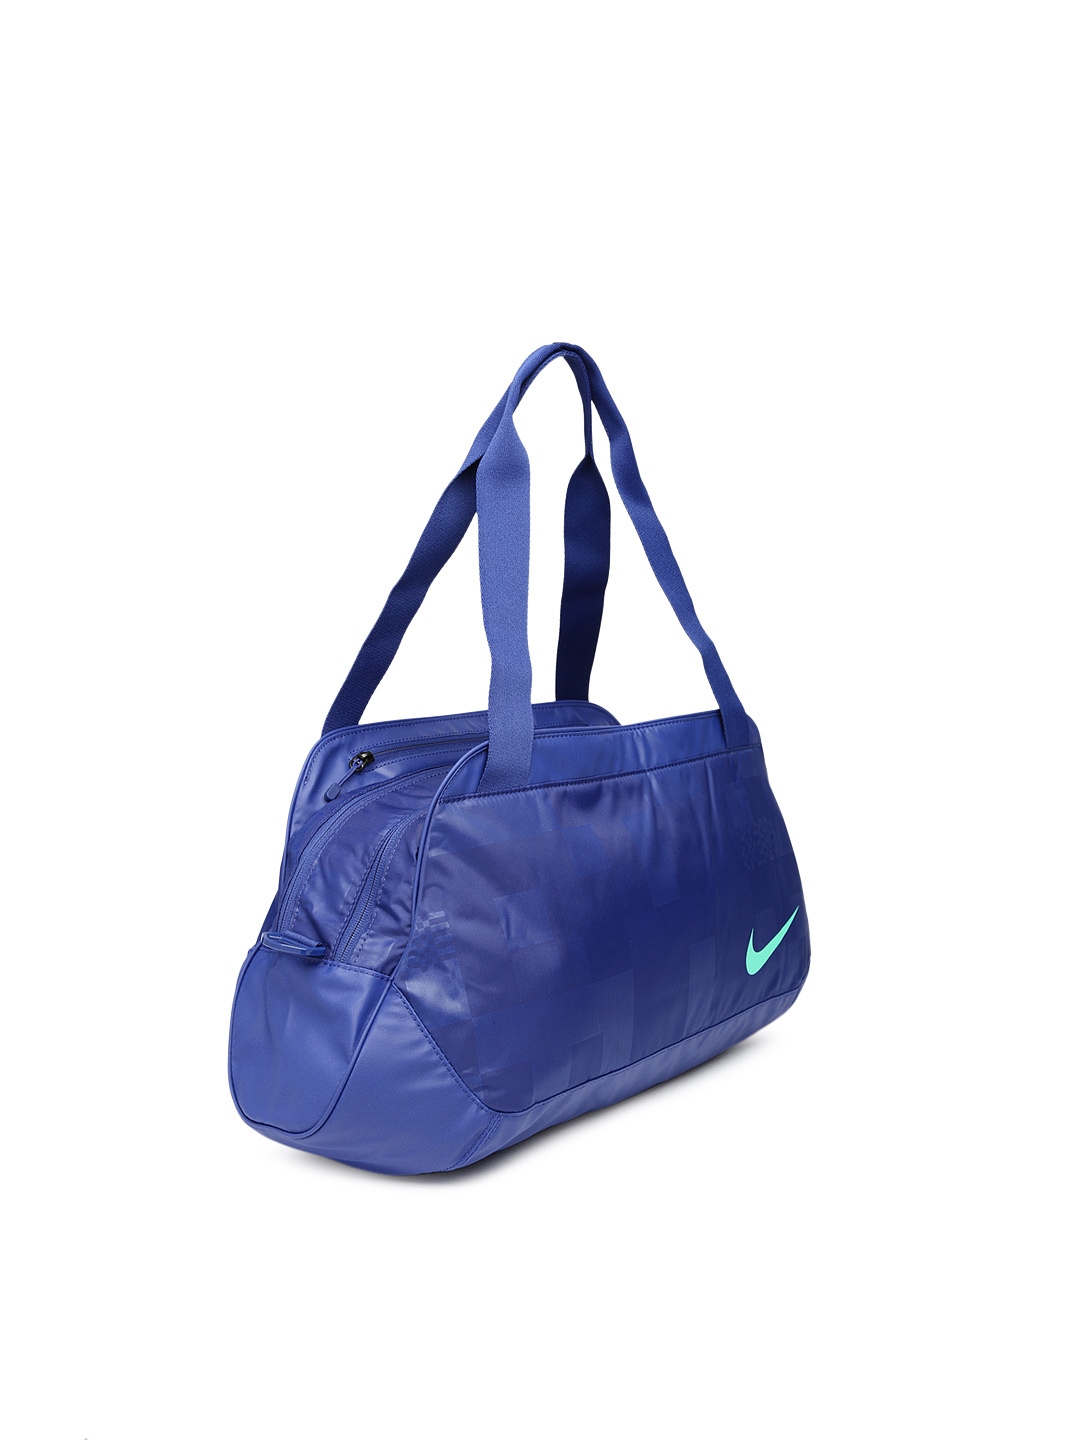 Myntra Nike Women Blue C72 Duffle Bag 857141 | Buy Myntra Nike Duffle Bag at best price online ...